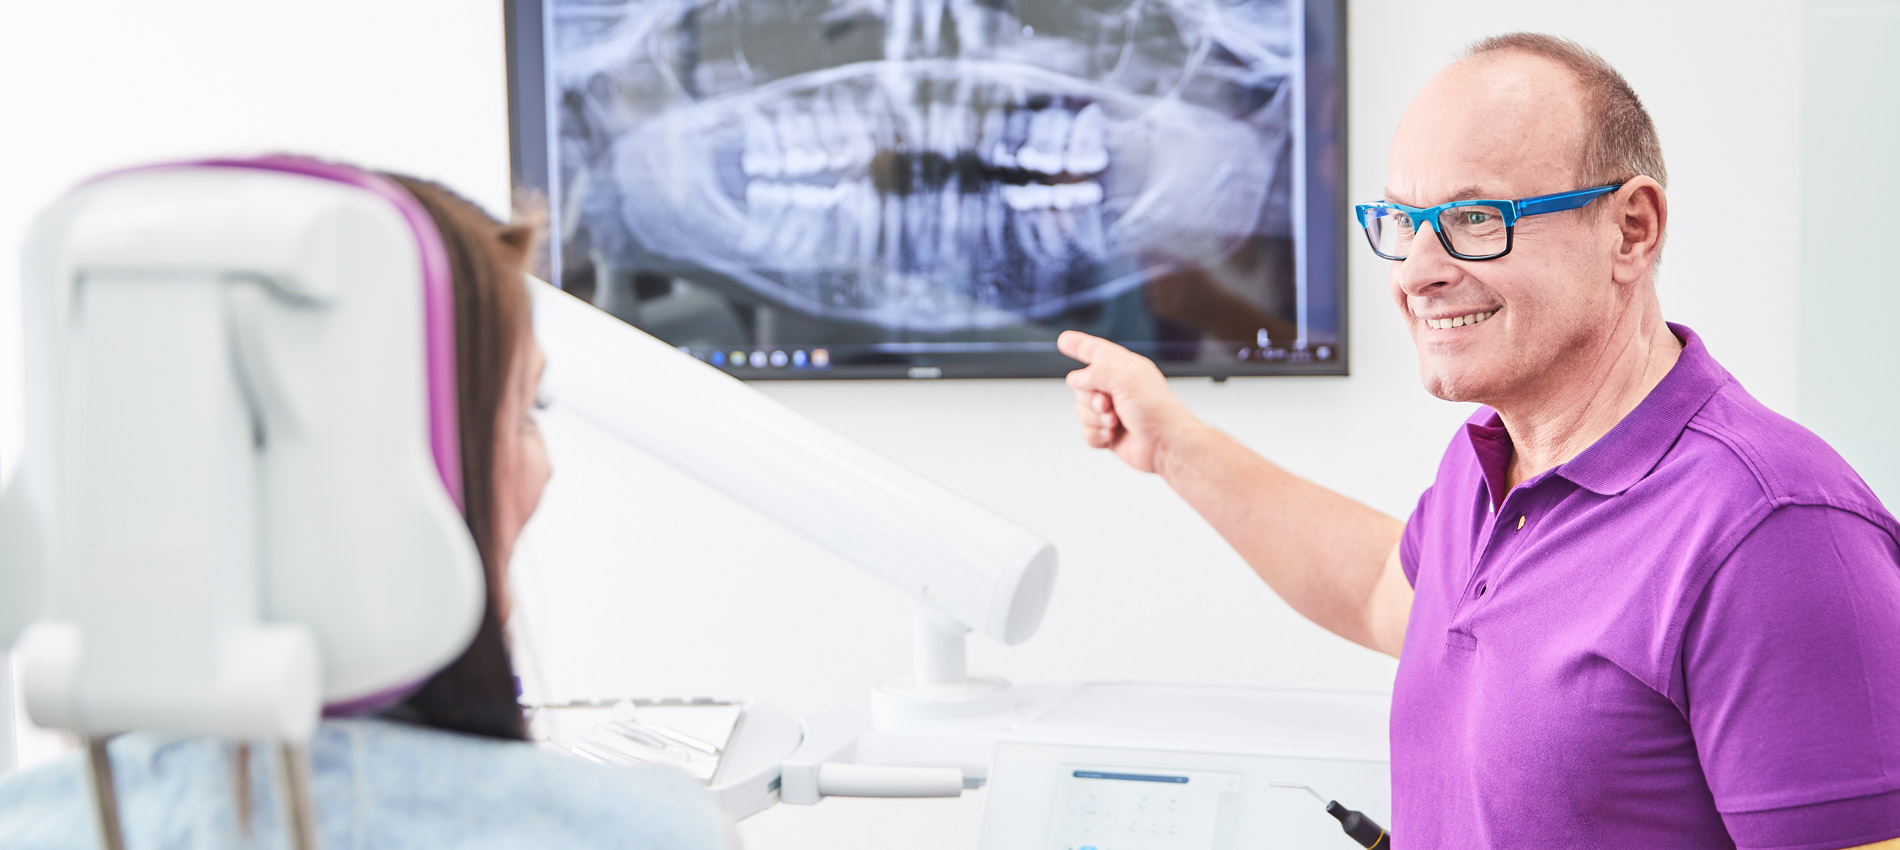 Zahnarztpraxis Ingo Lange - Implantate 1